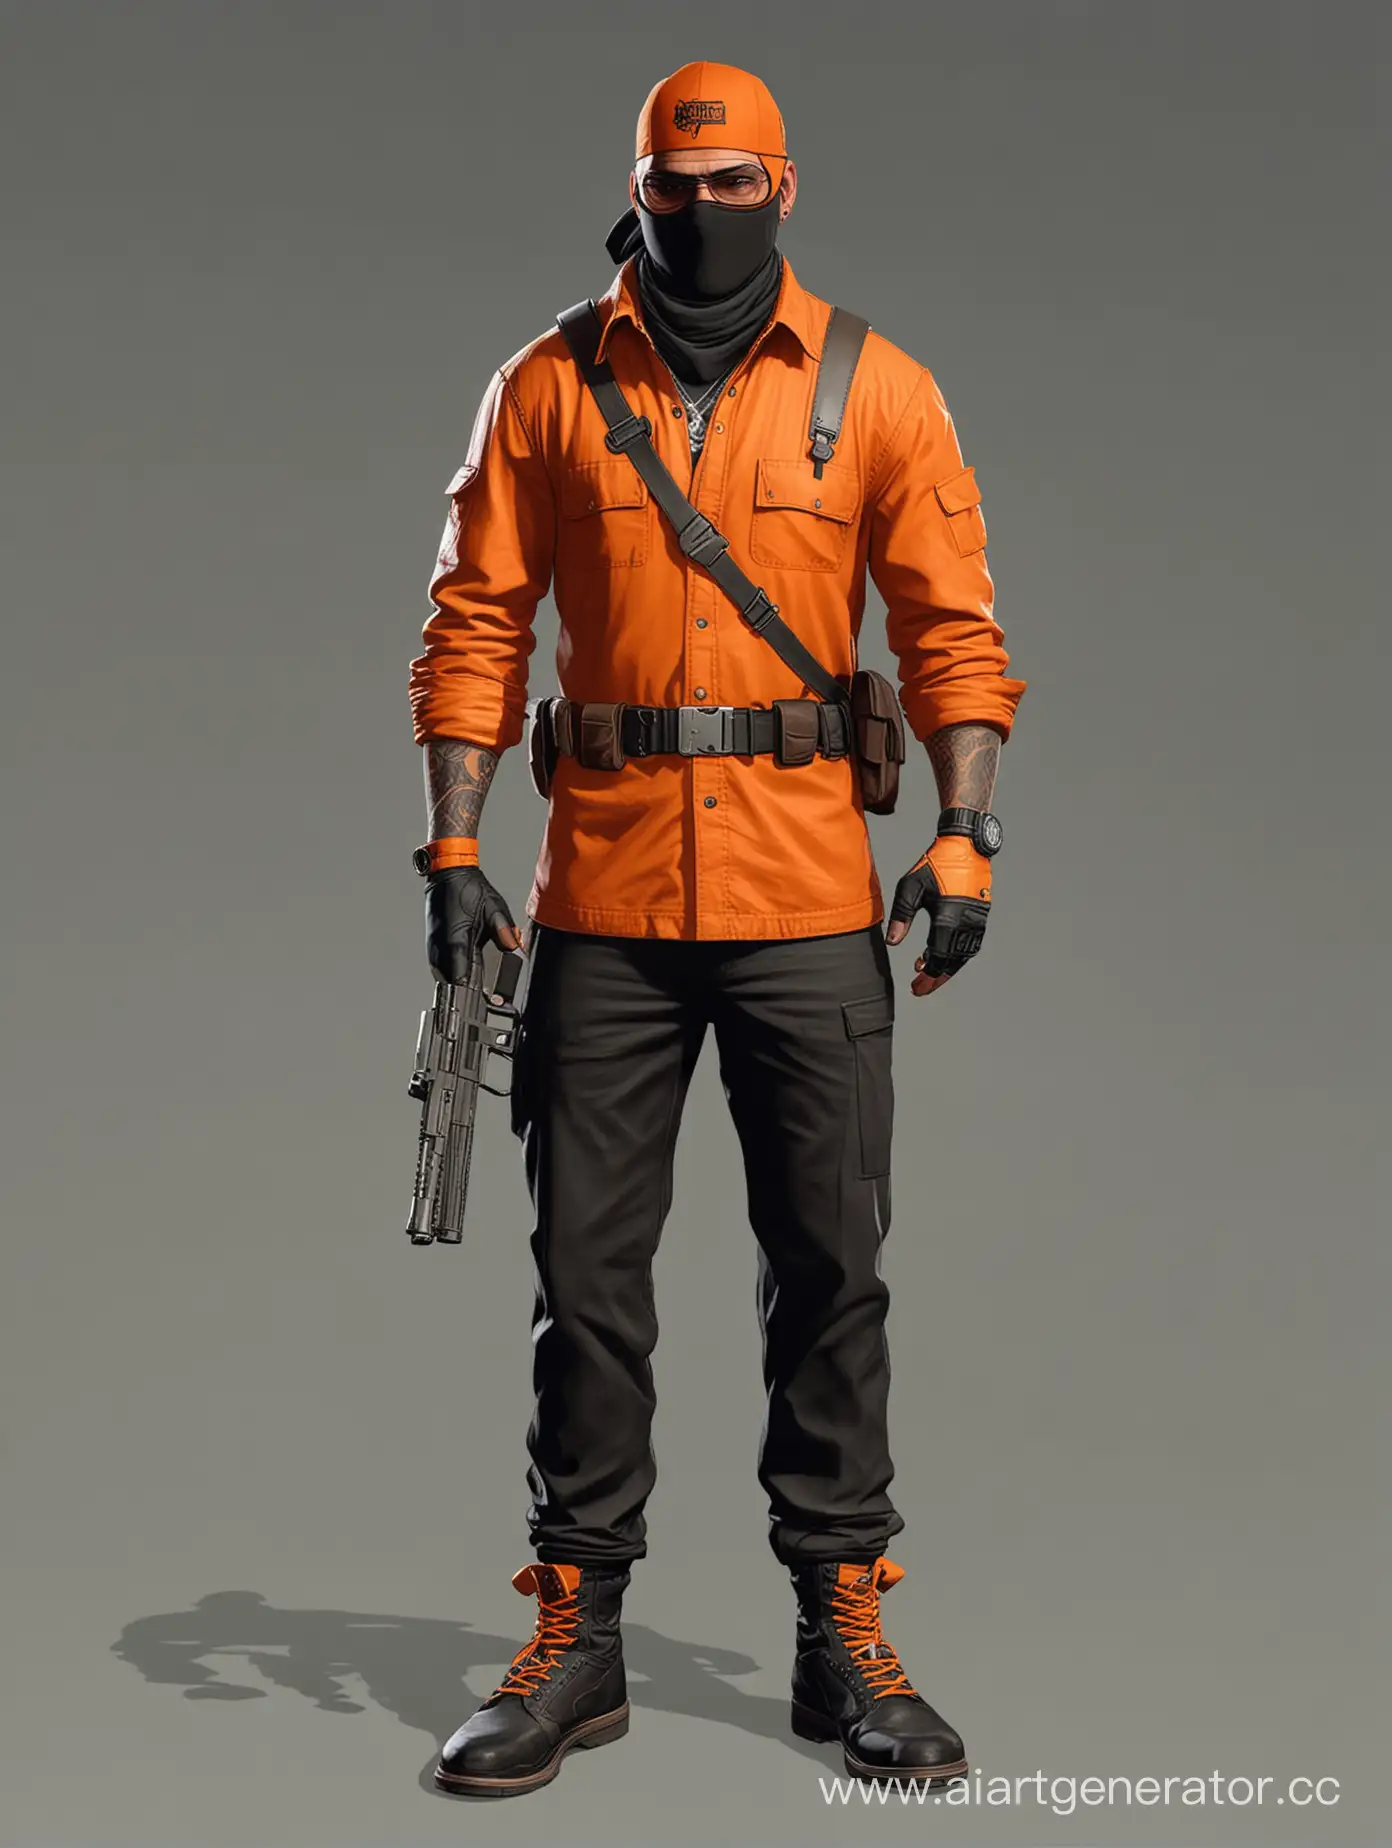 Dynamic-GTA-5-Bandit-in-Vibrant-Orange-Outfit-Wielding-Weapon